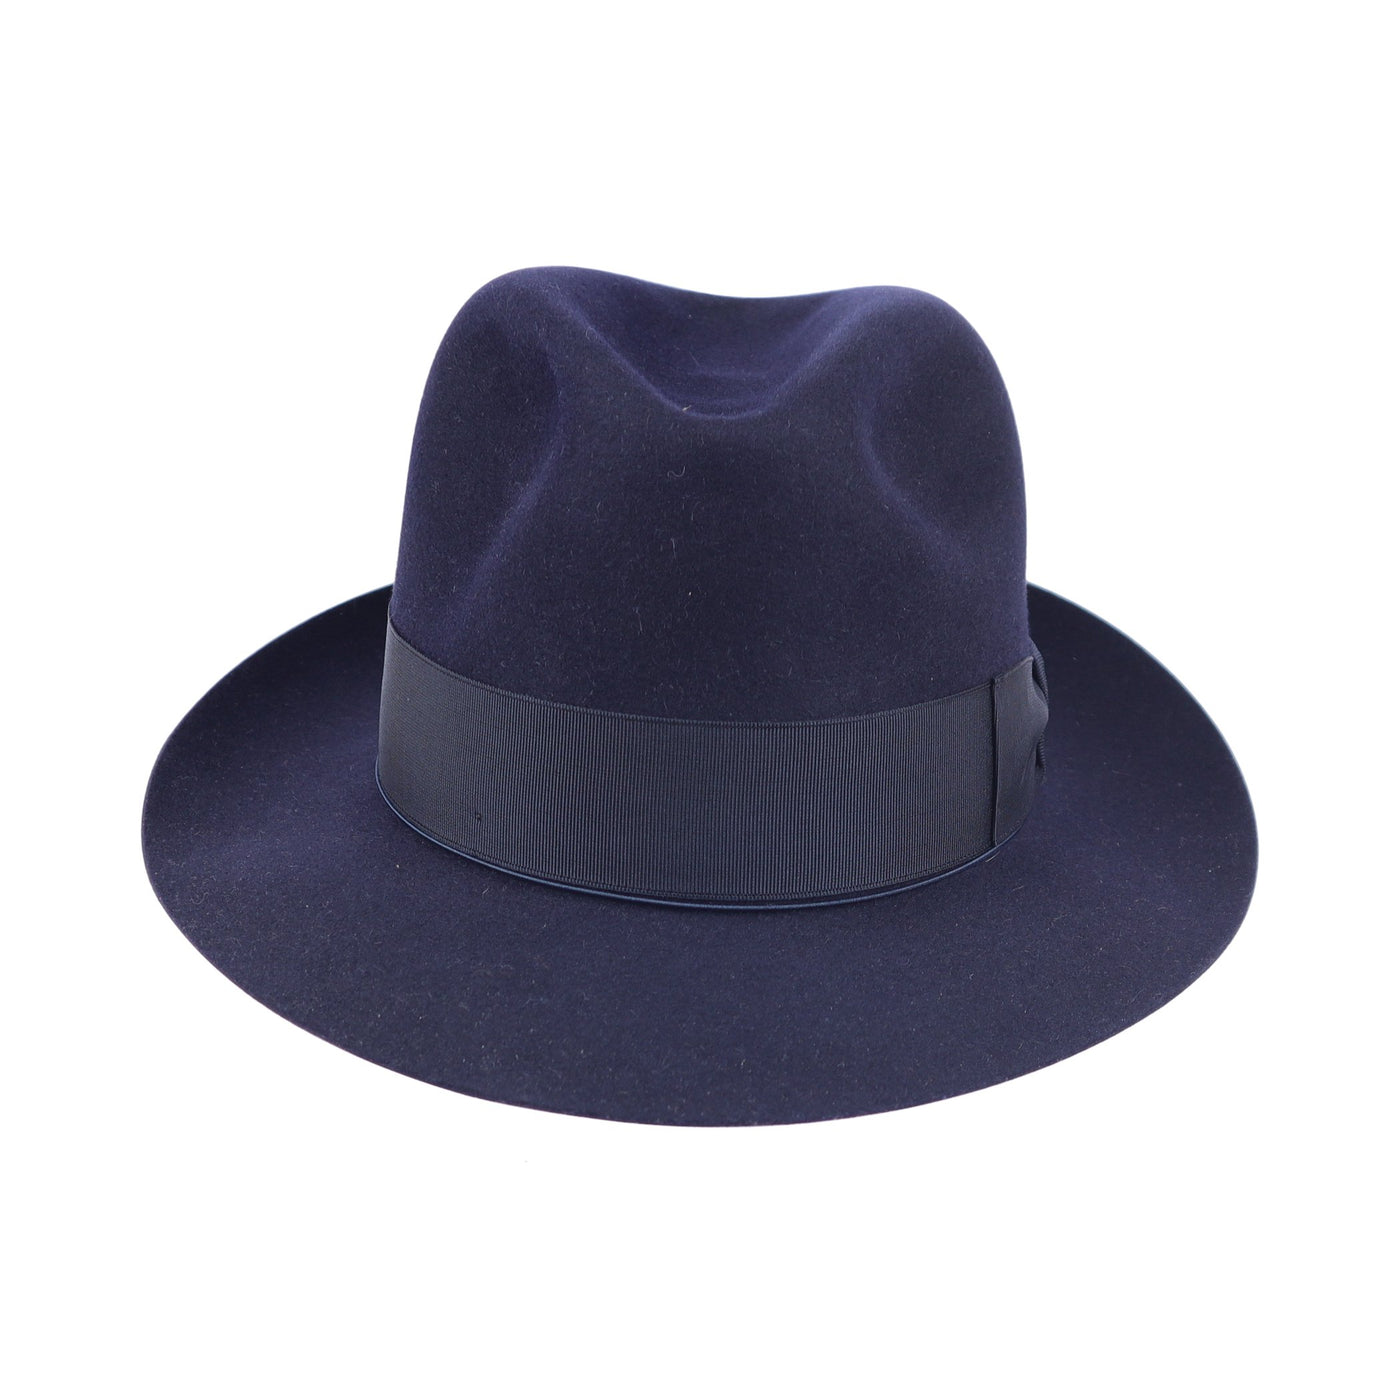 Film (JJ) - Navy, product_type] - Borsalino for Atica fedora hat